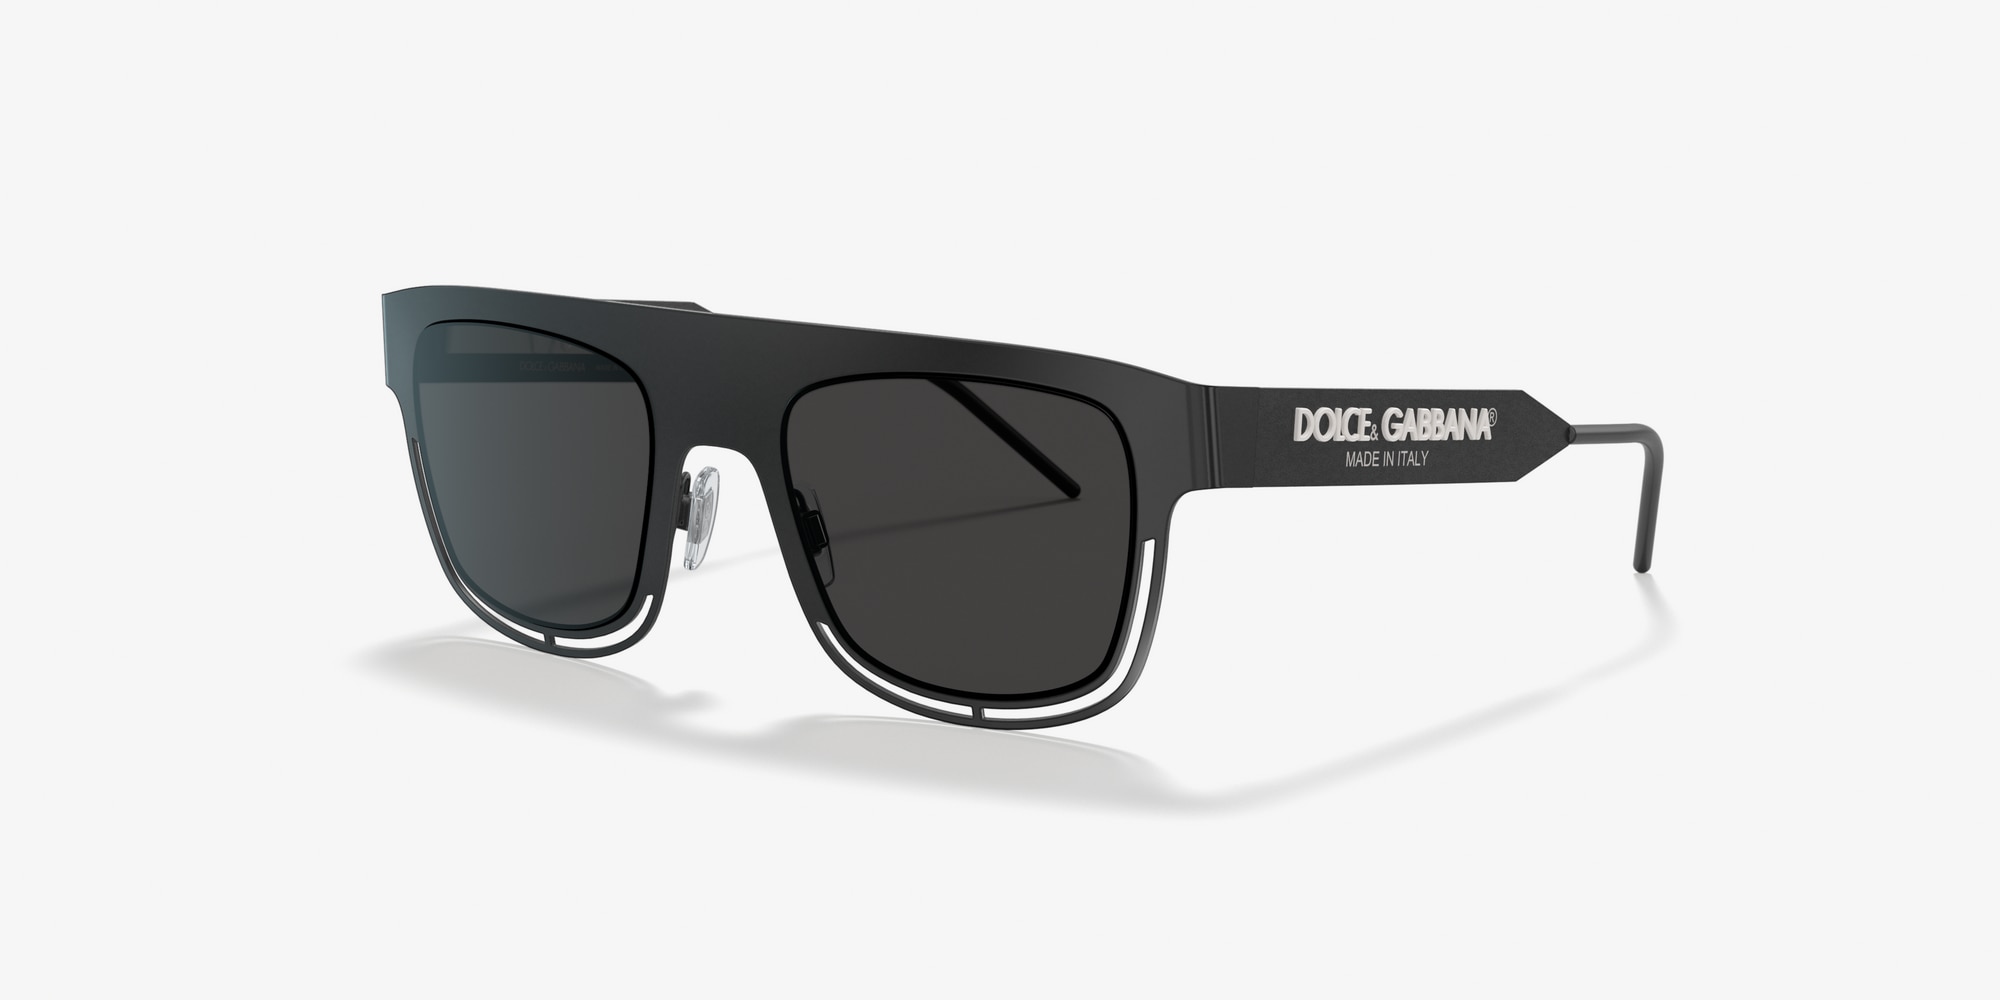 dolce gabbana black sunglasses